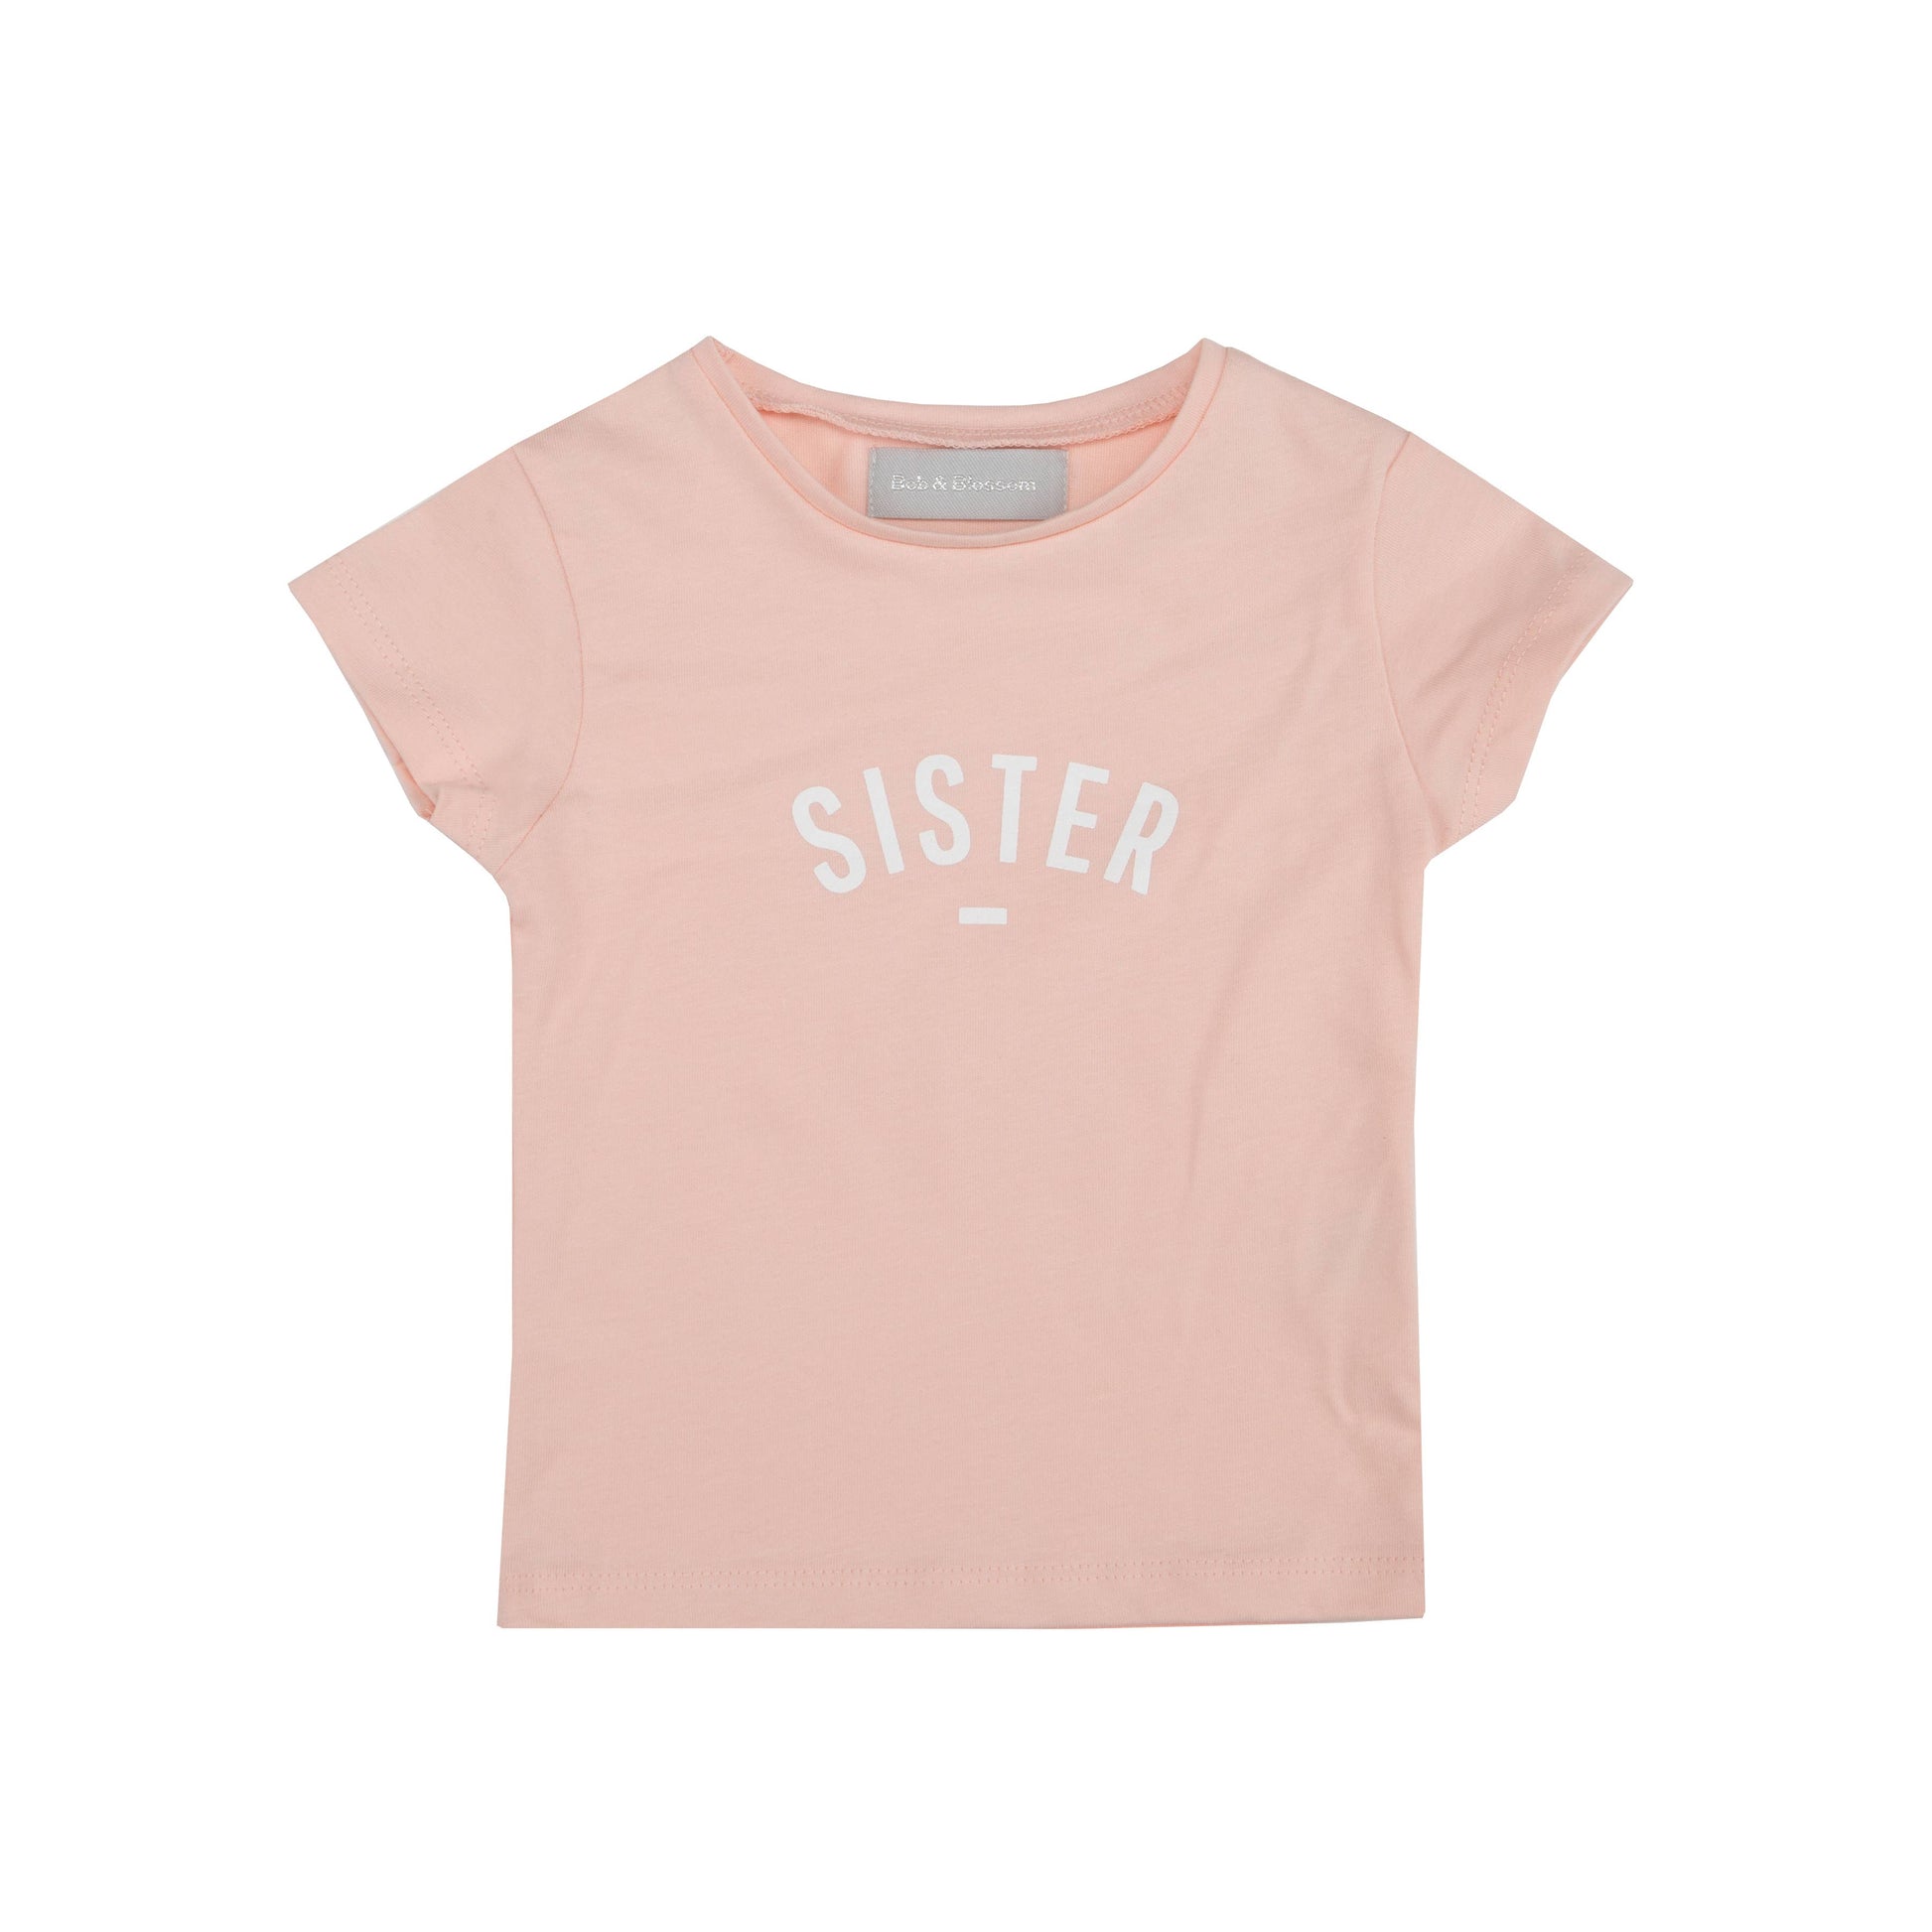 Blush 'SISTER' Cap Sleeved T Shirt - Einstein's Attic